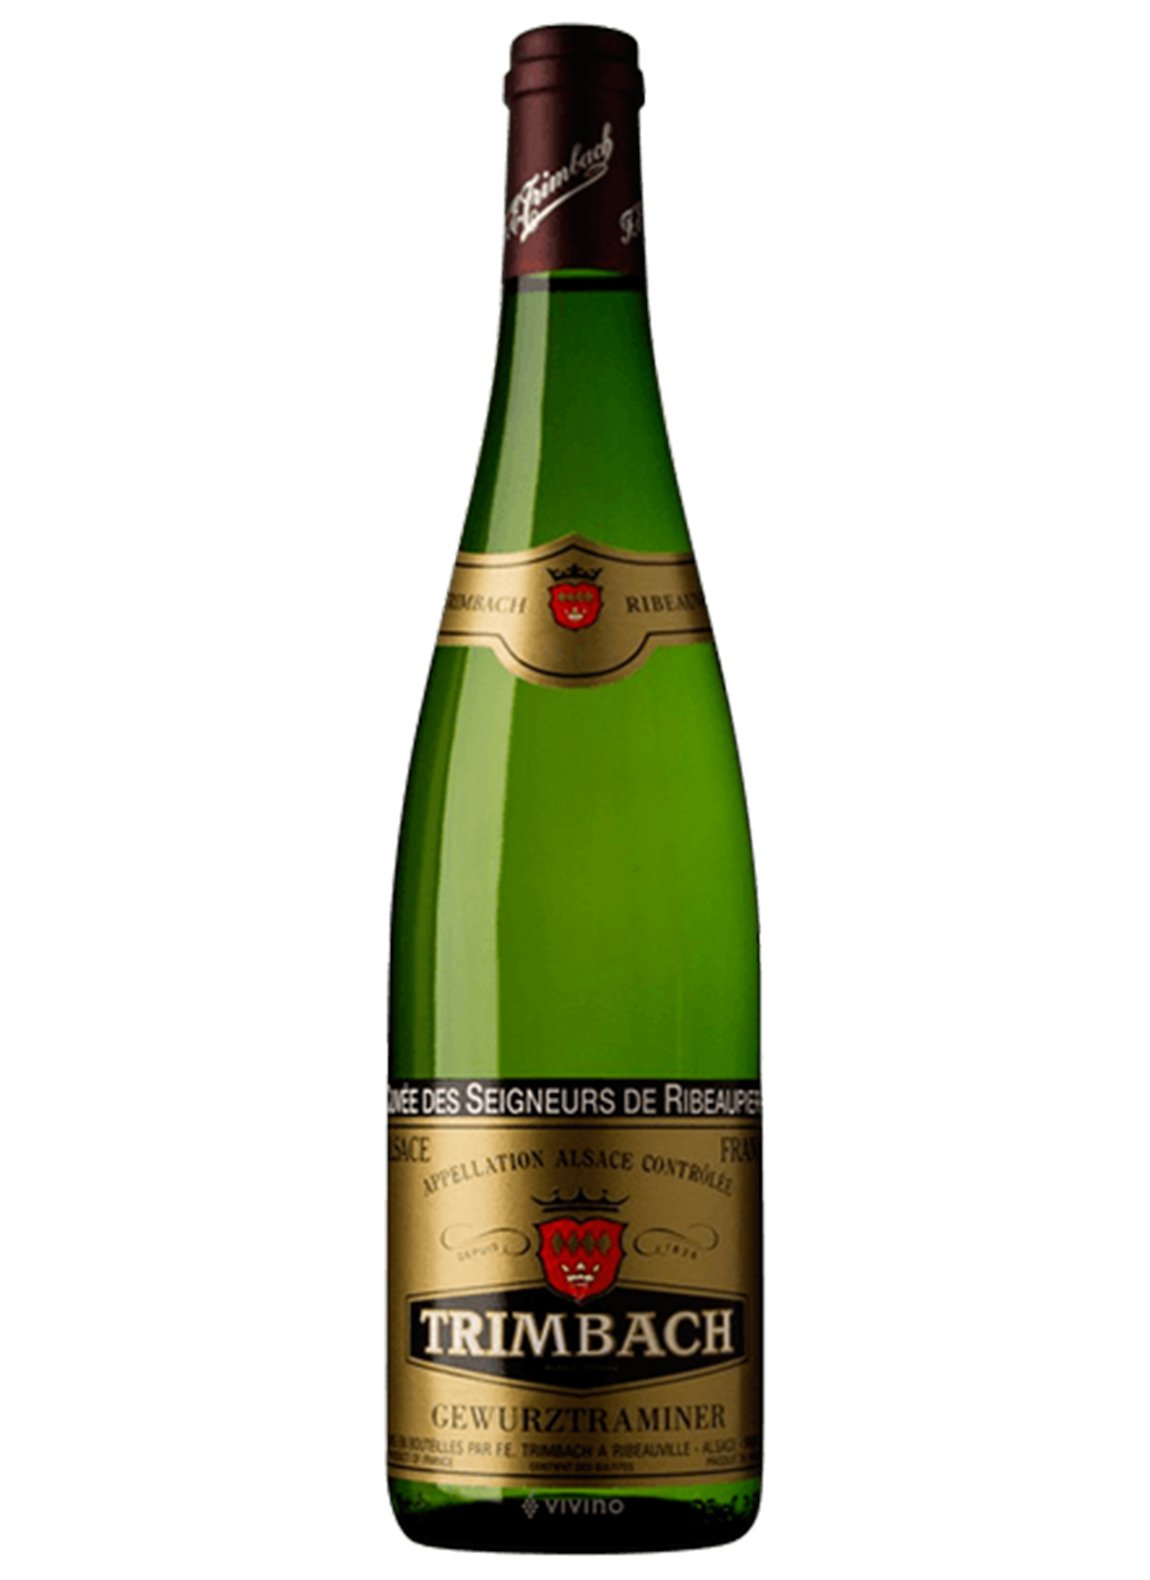 Trimbach Gewurztraminer Seignieurs De Ribeaupierre 2011 375 ml - Wine France White - Liquor Wine Cave